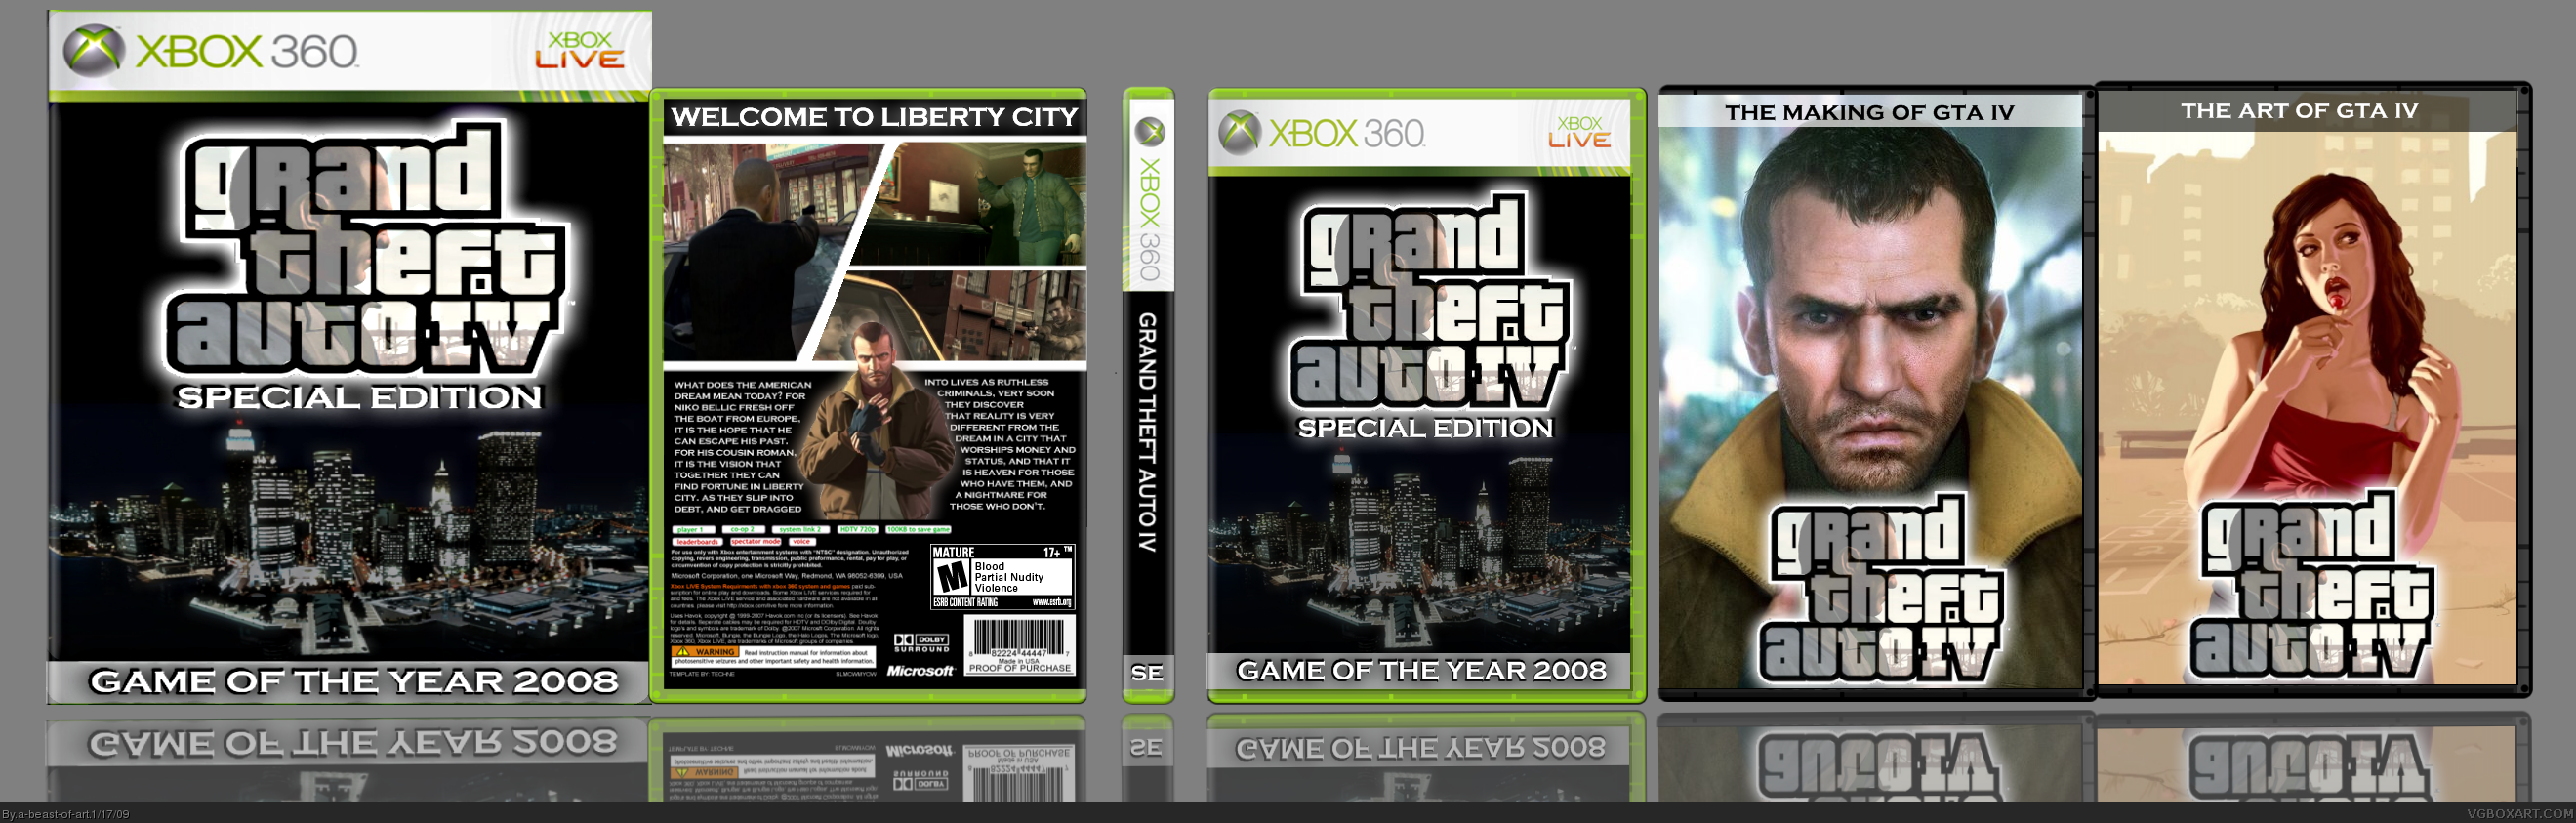 Grand Theft Auto IV Special Edition box cover